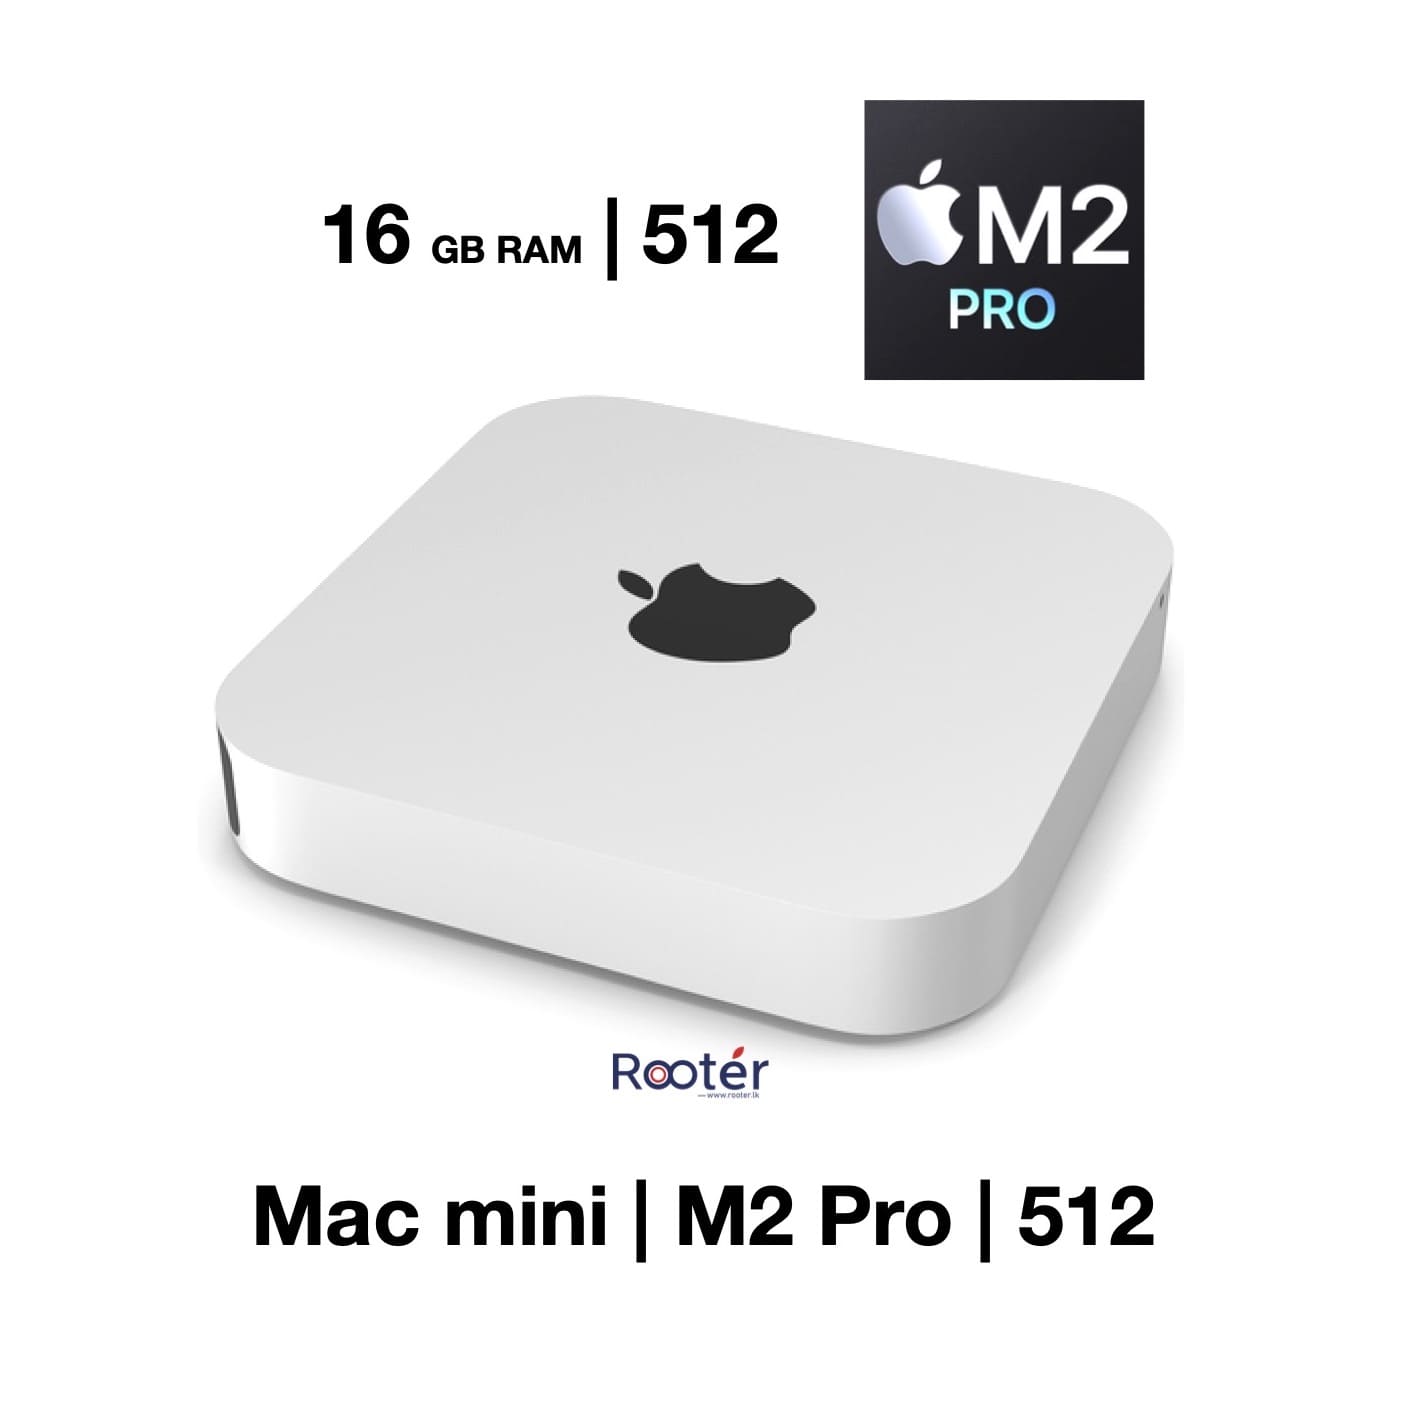 Coming Soon - Mac mini | M2 Pro